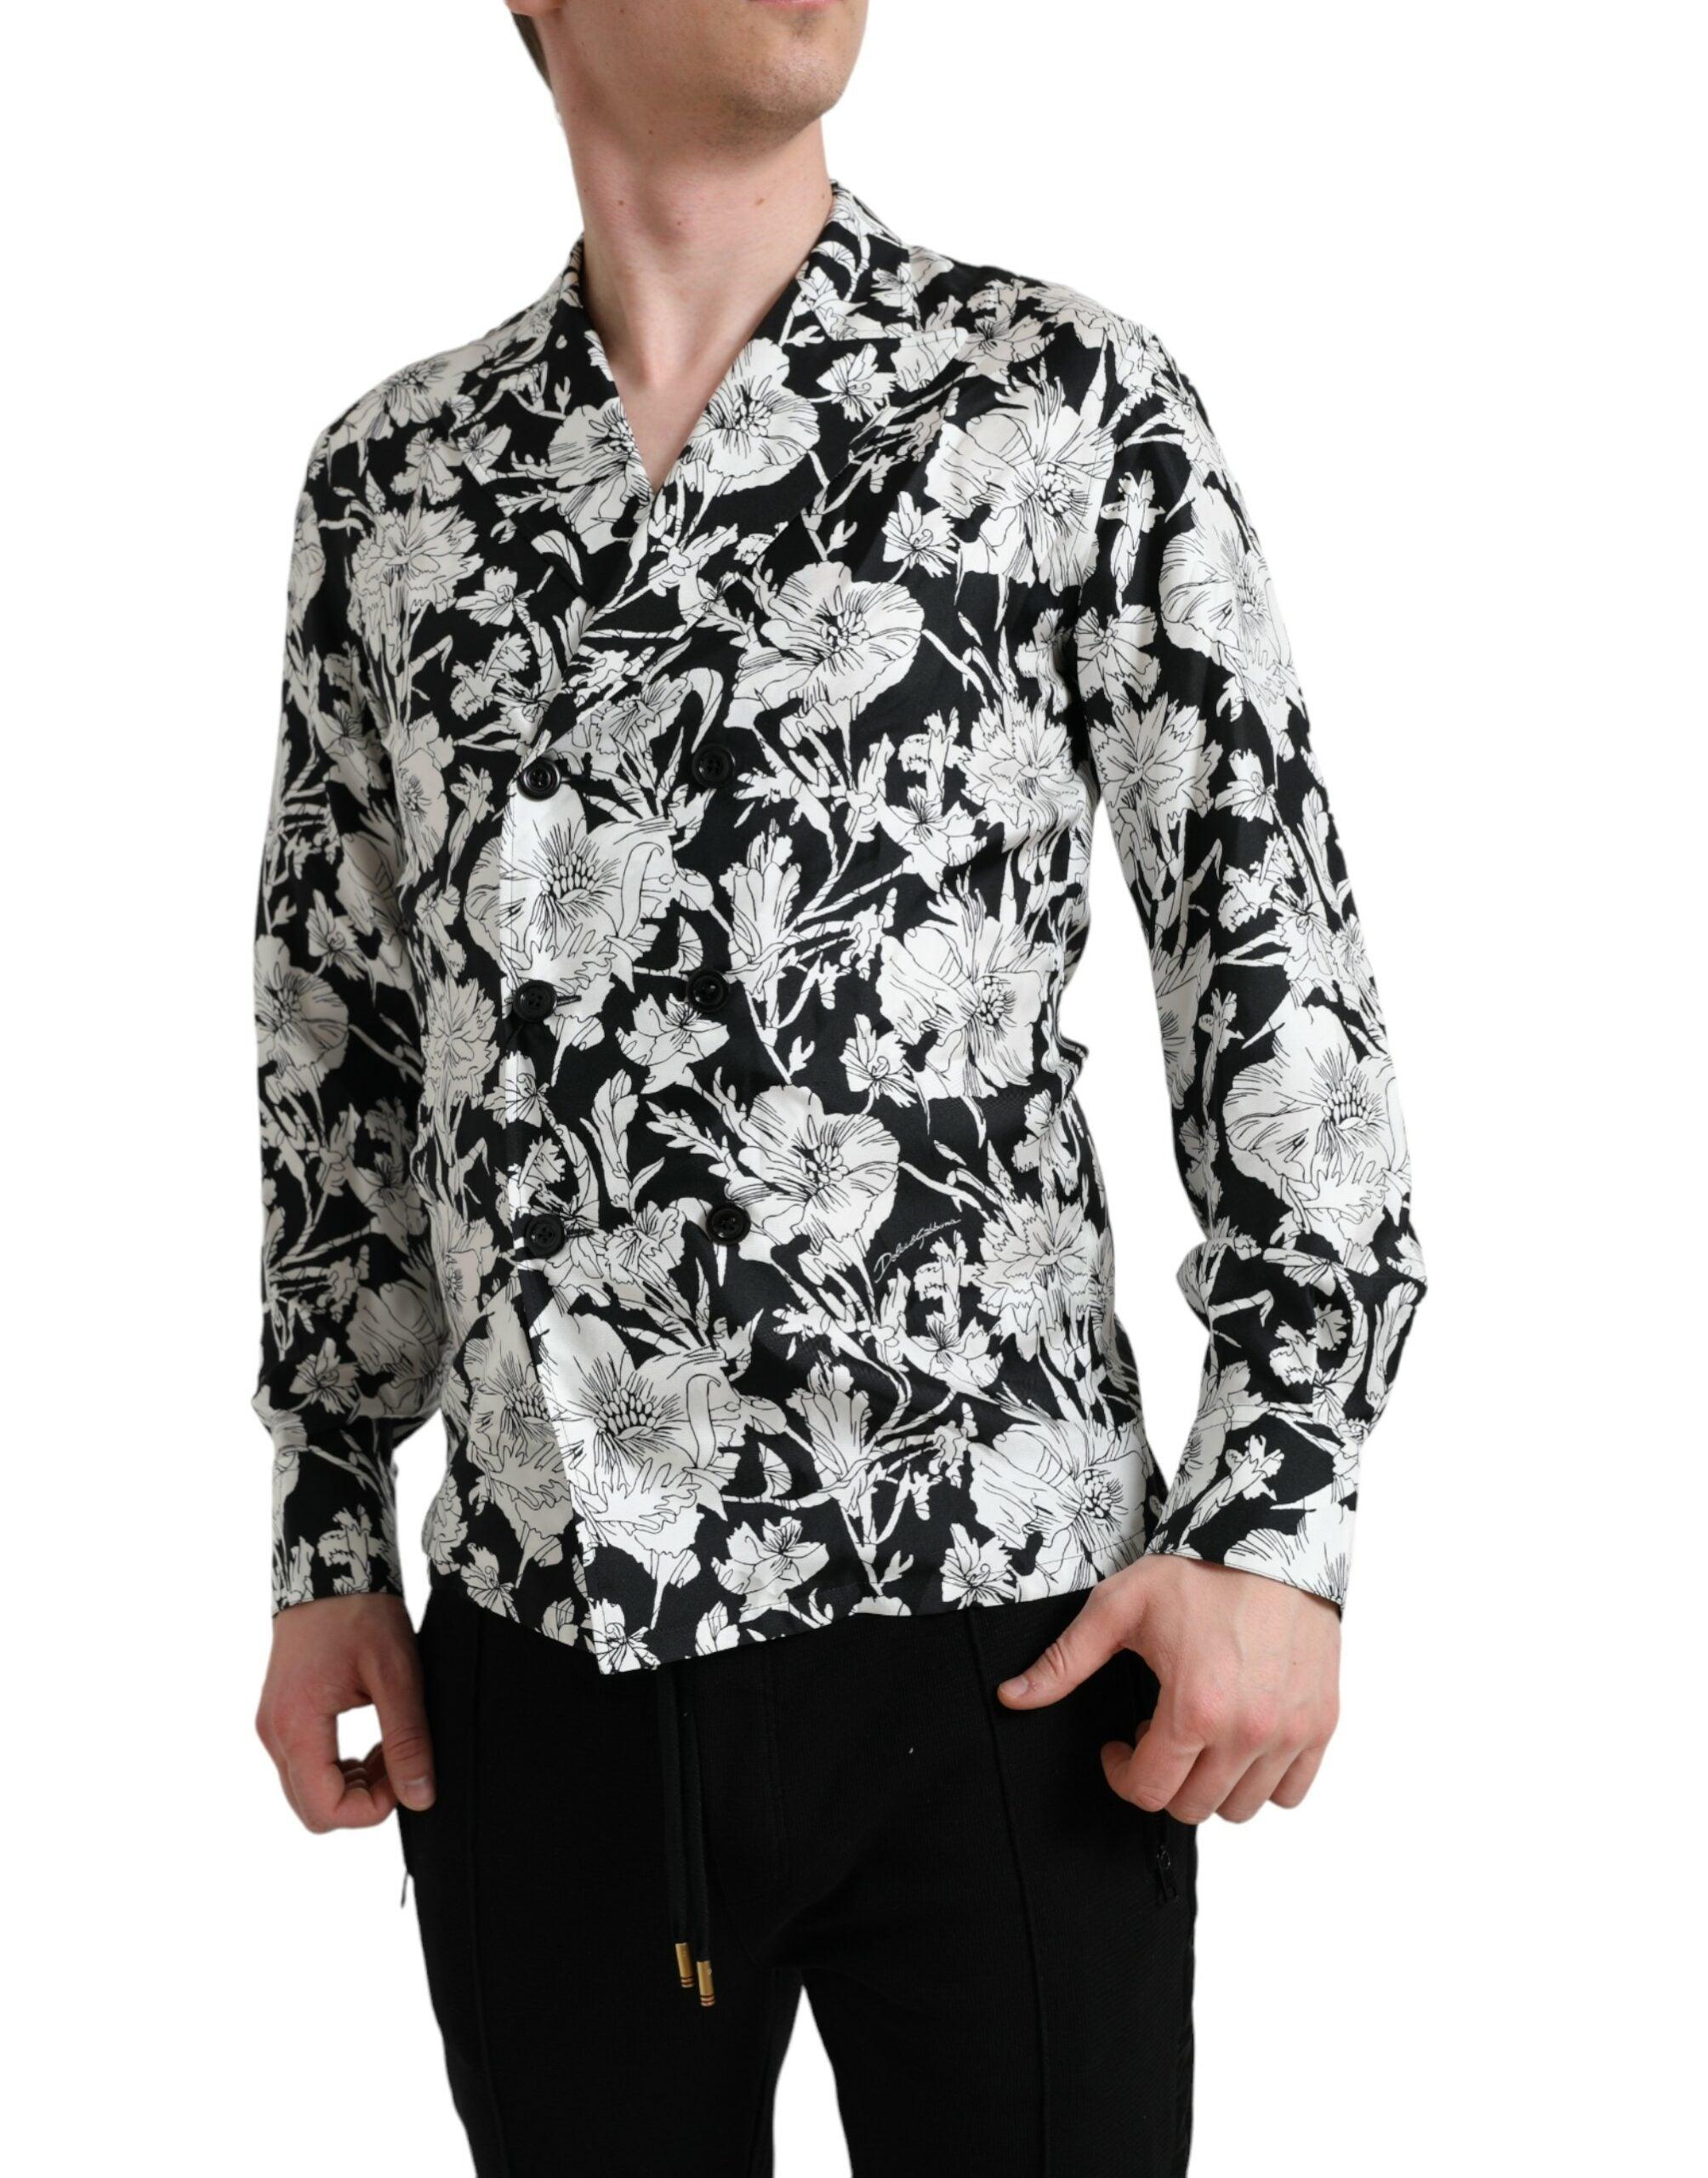 Black White Floral Button Down Casual Shirt - Divitiae Glamour